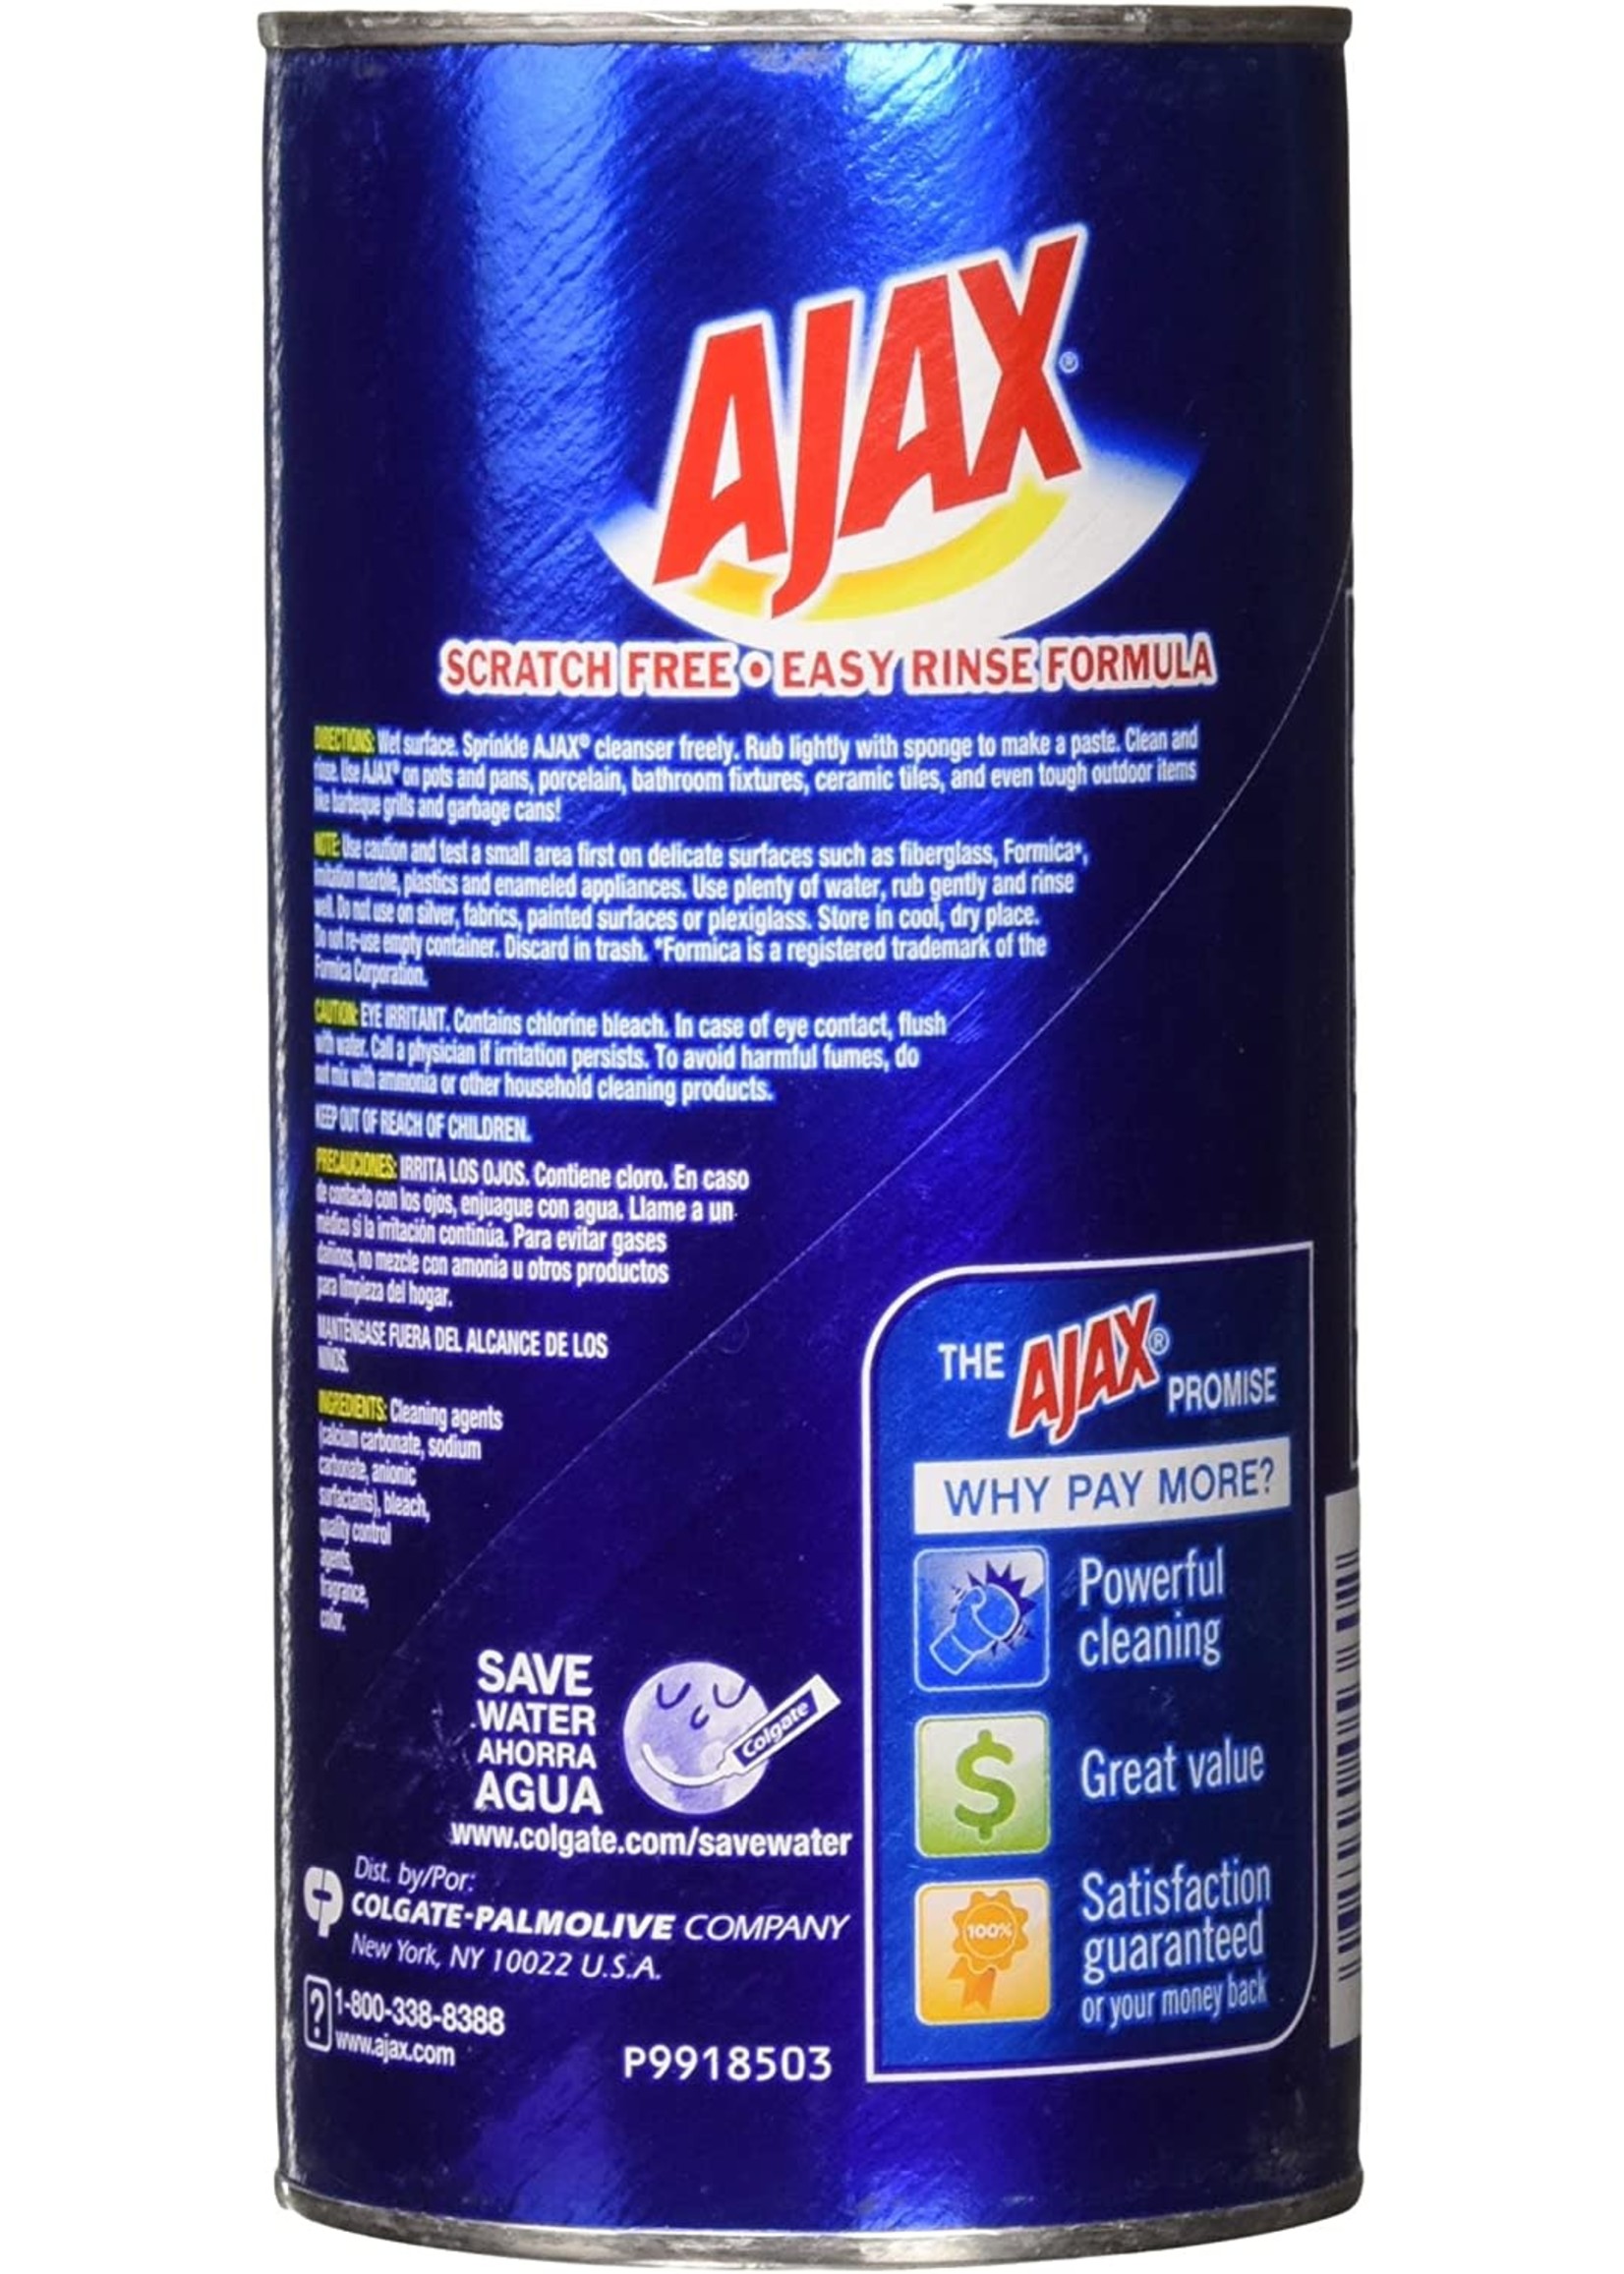 Ajax Powder Cleanser with Bleach, 14oz - 24/case ($23.76)